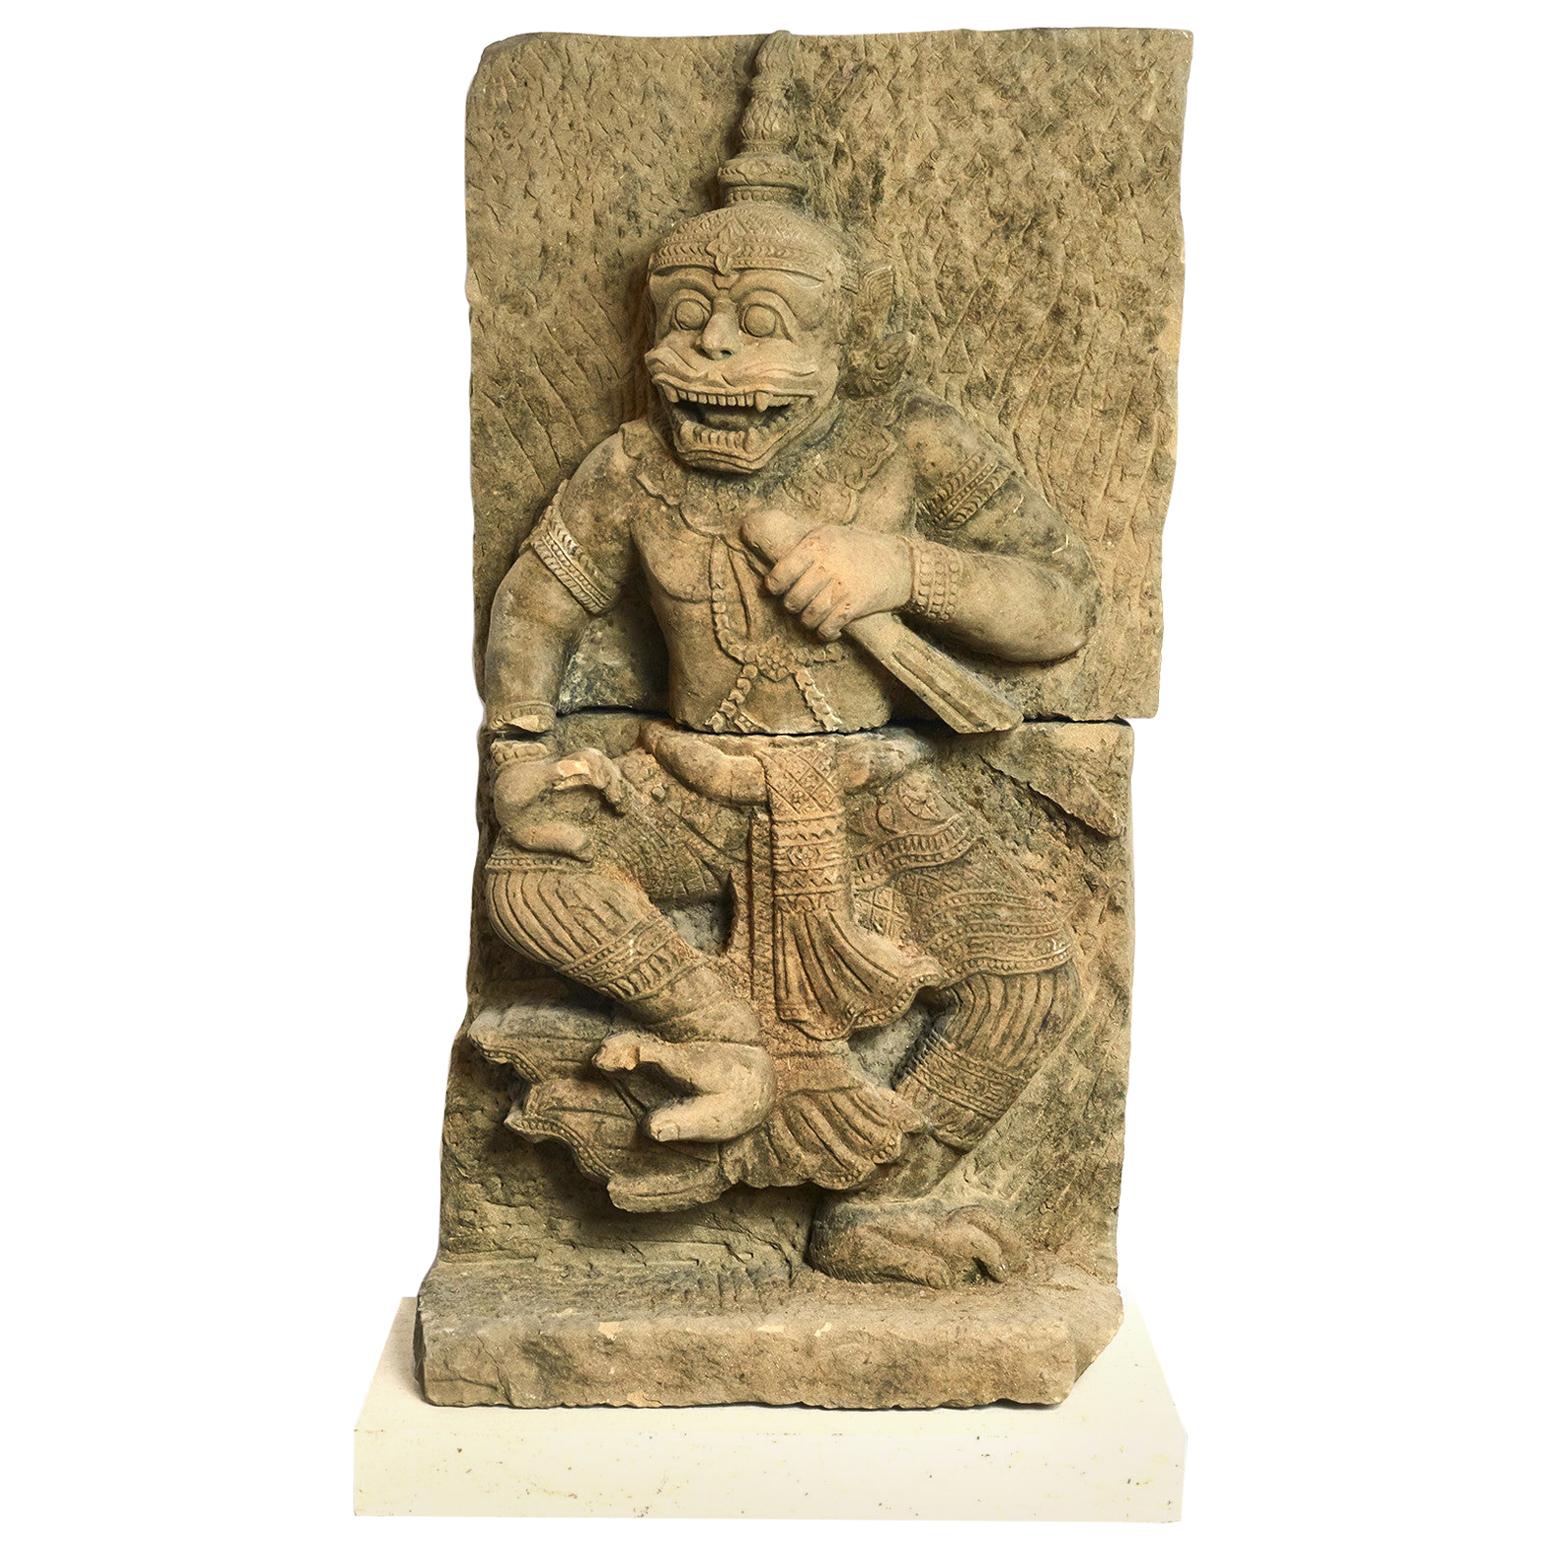 500-600 Year-Old Sandstone Sculpture of Hanuman, The Monkey God